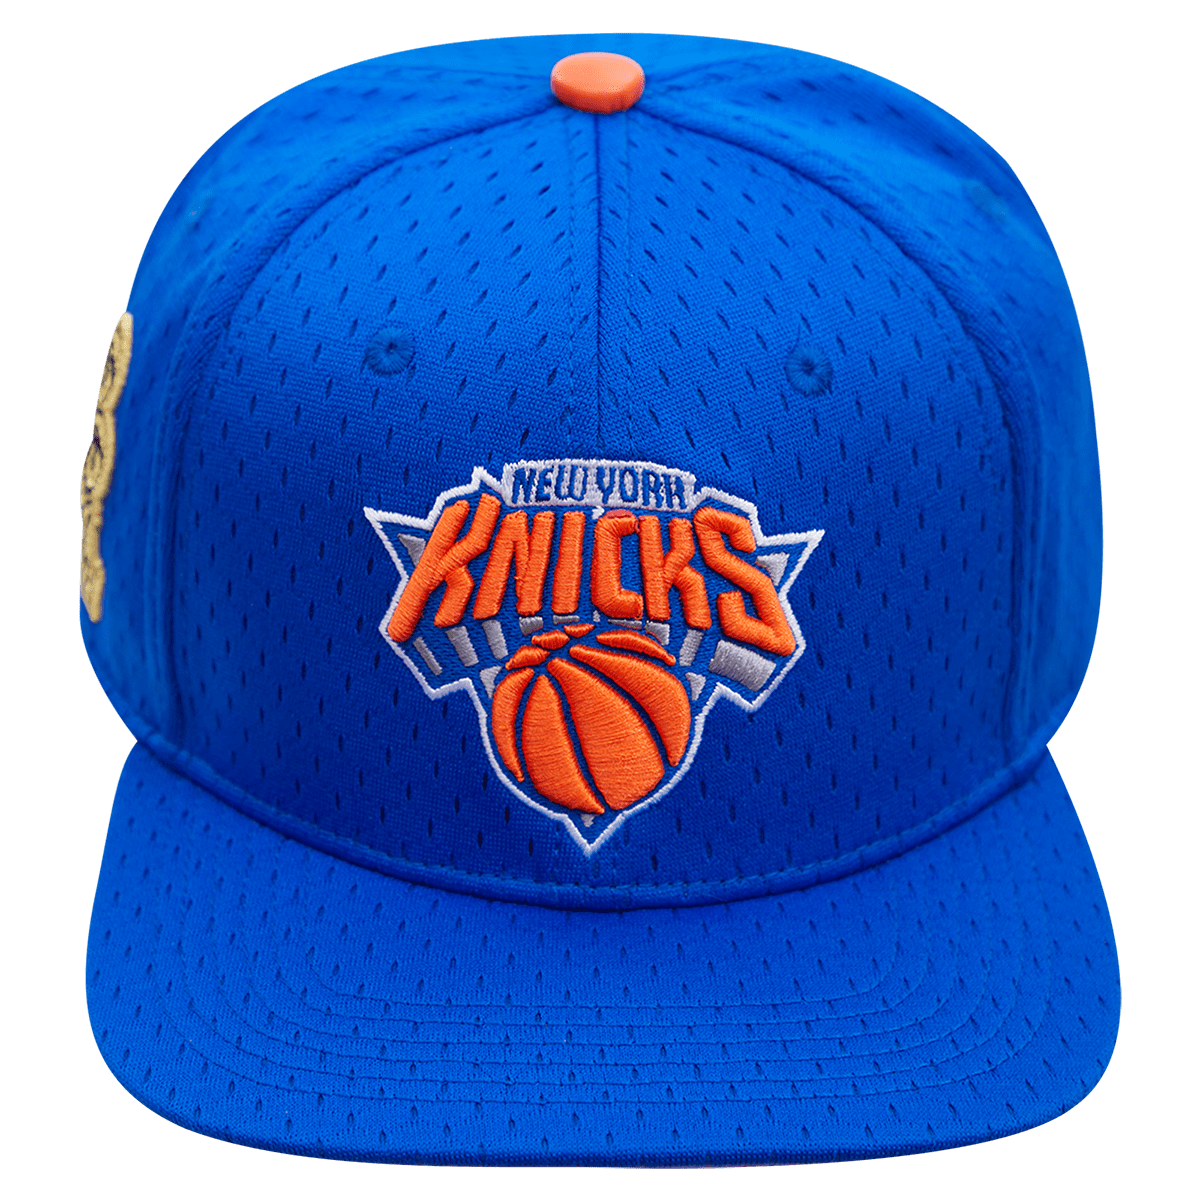 NBA New York Knicks Enamel Pin - New 